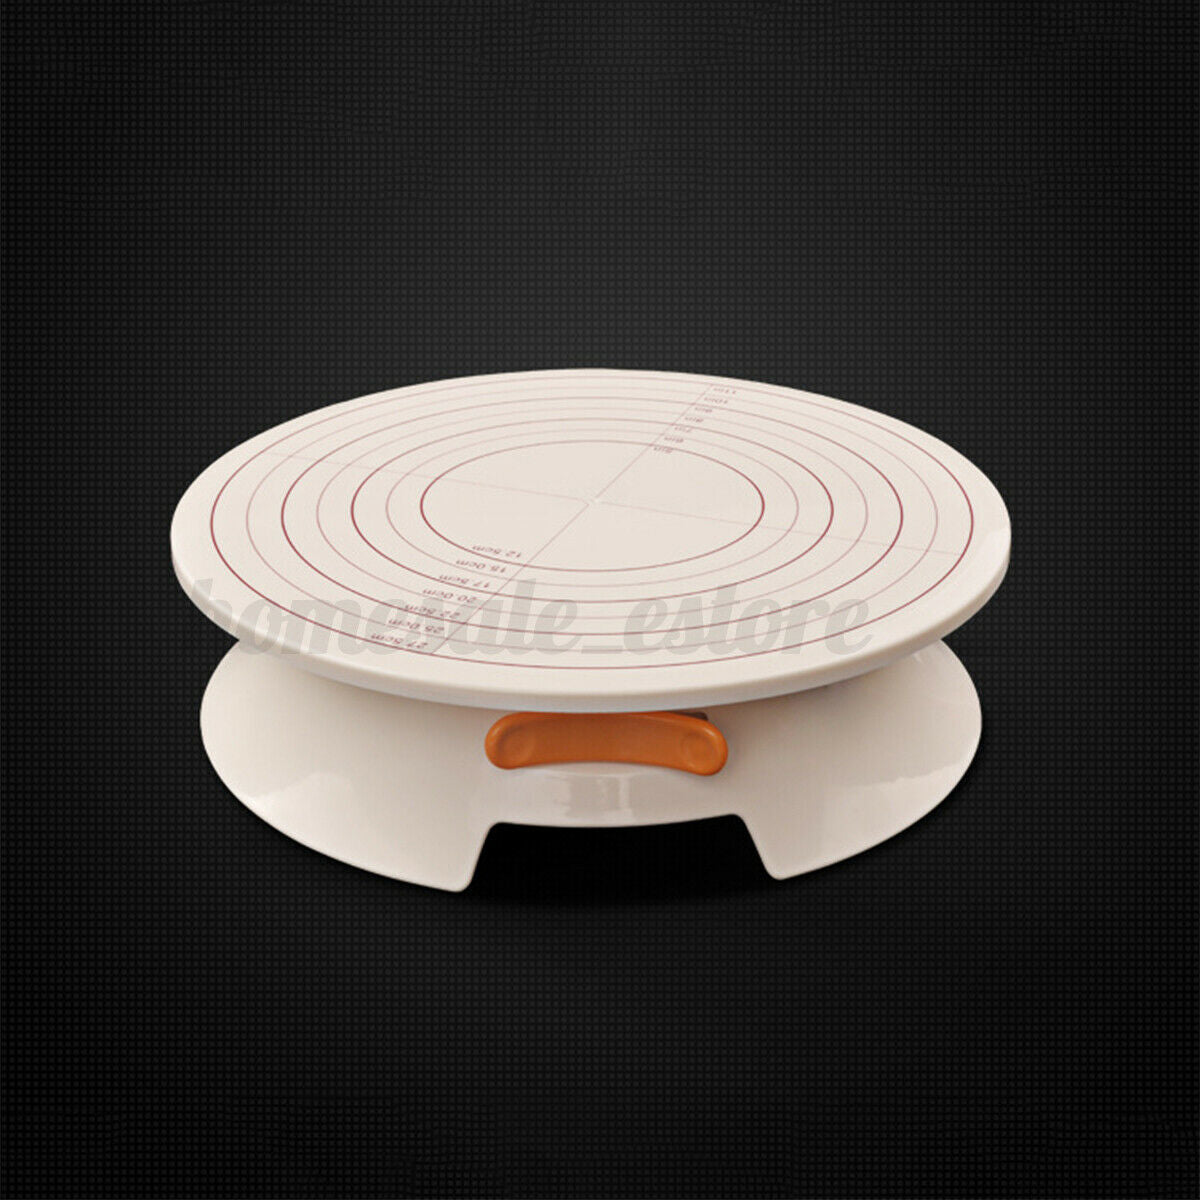 12 Inch Cake Making Turntable Revolving Decorating Platform Stand DIY Display